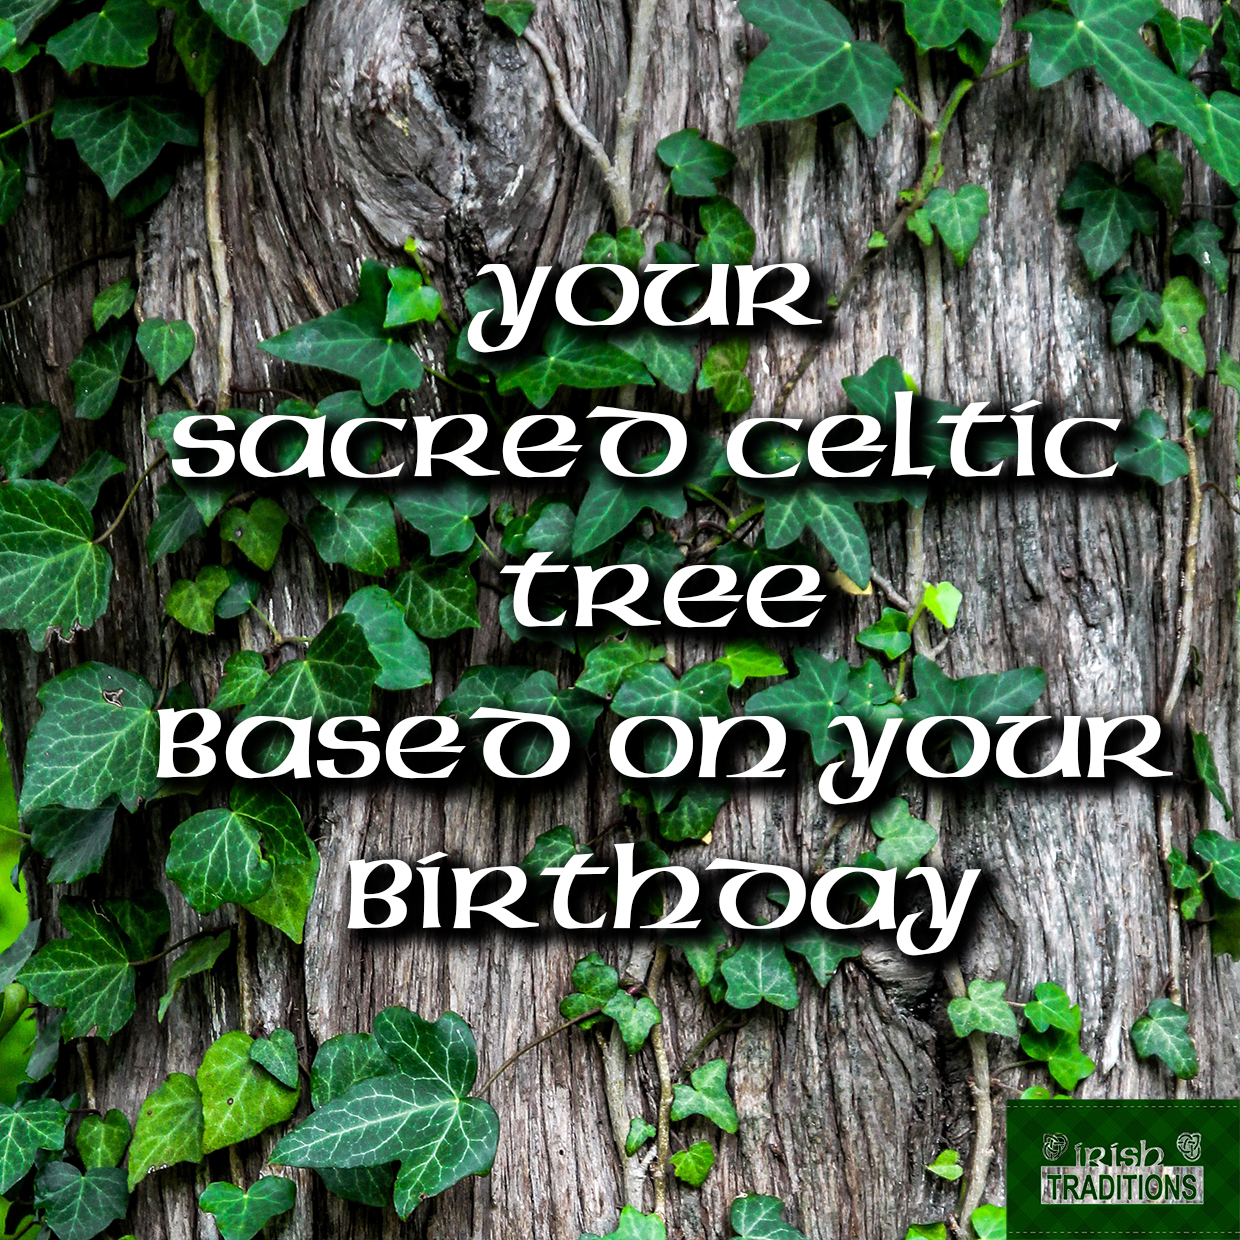 celtic tree astrology symbols